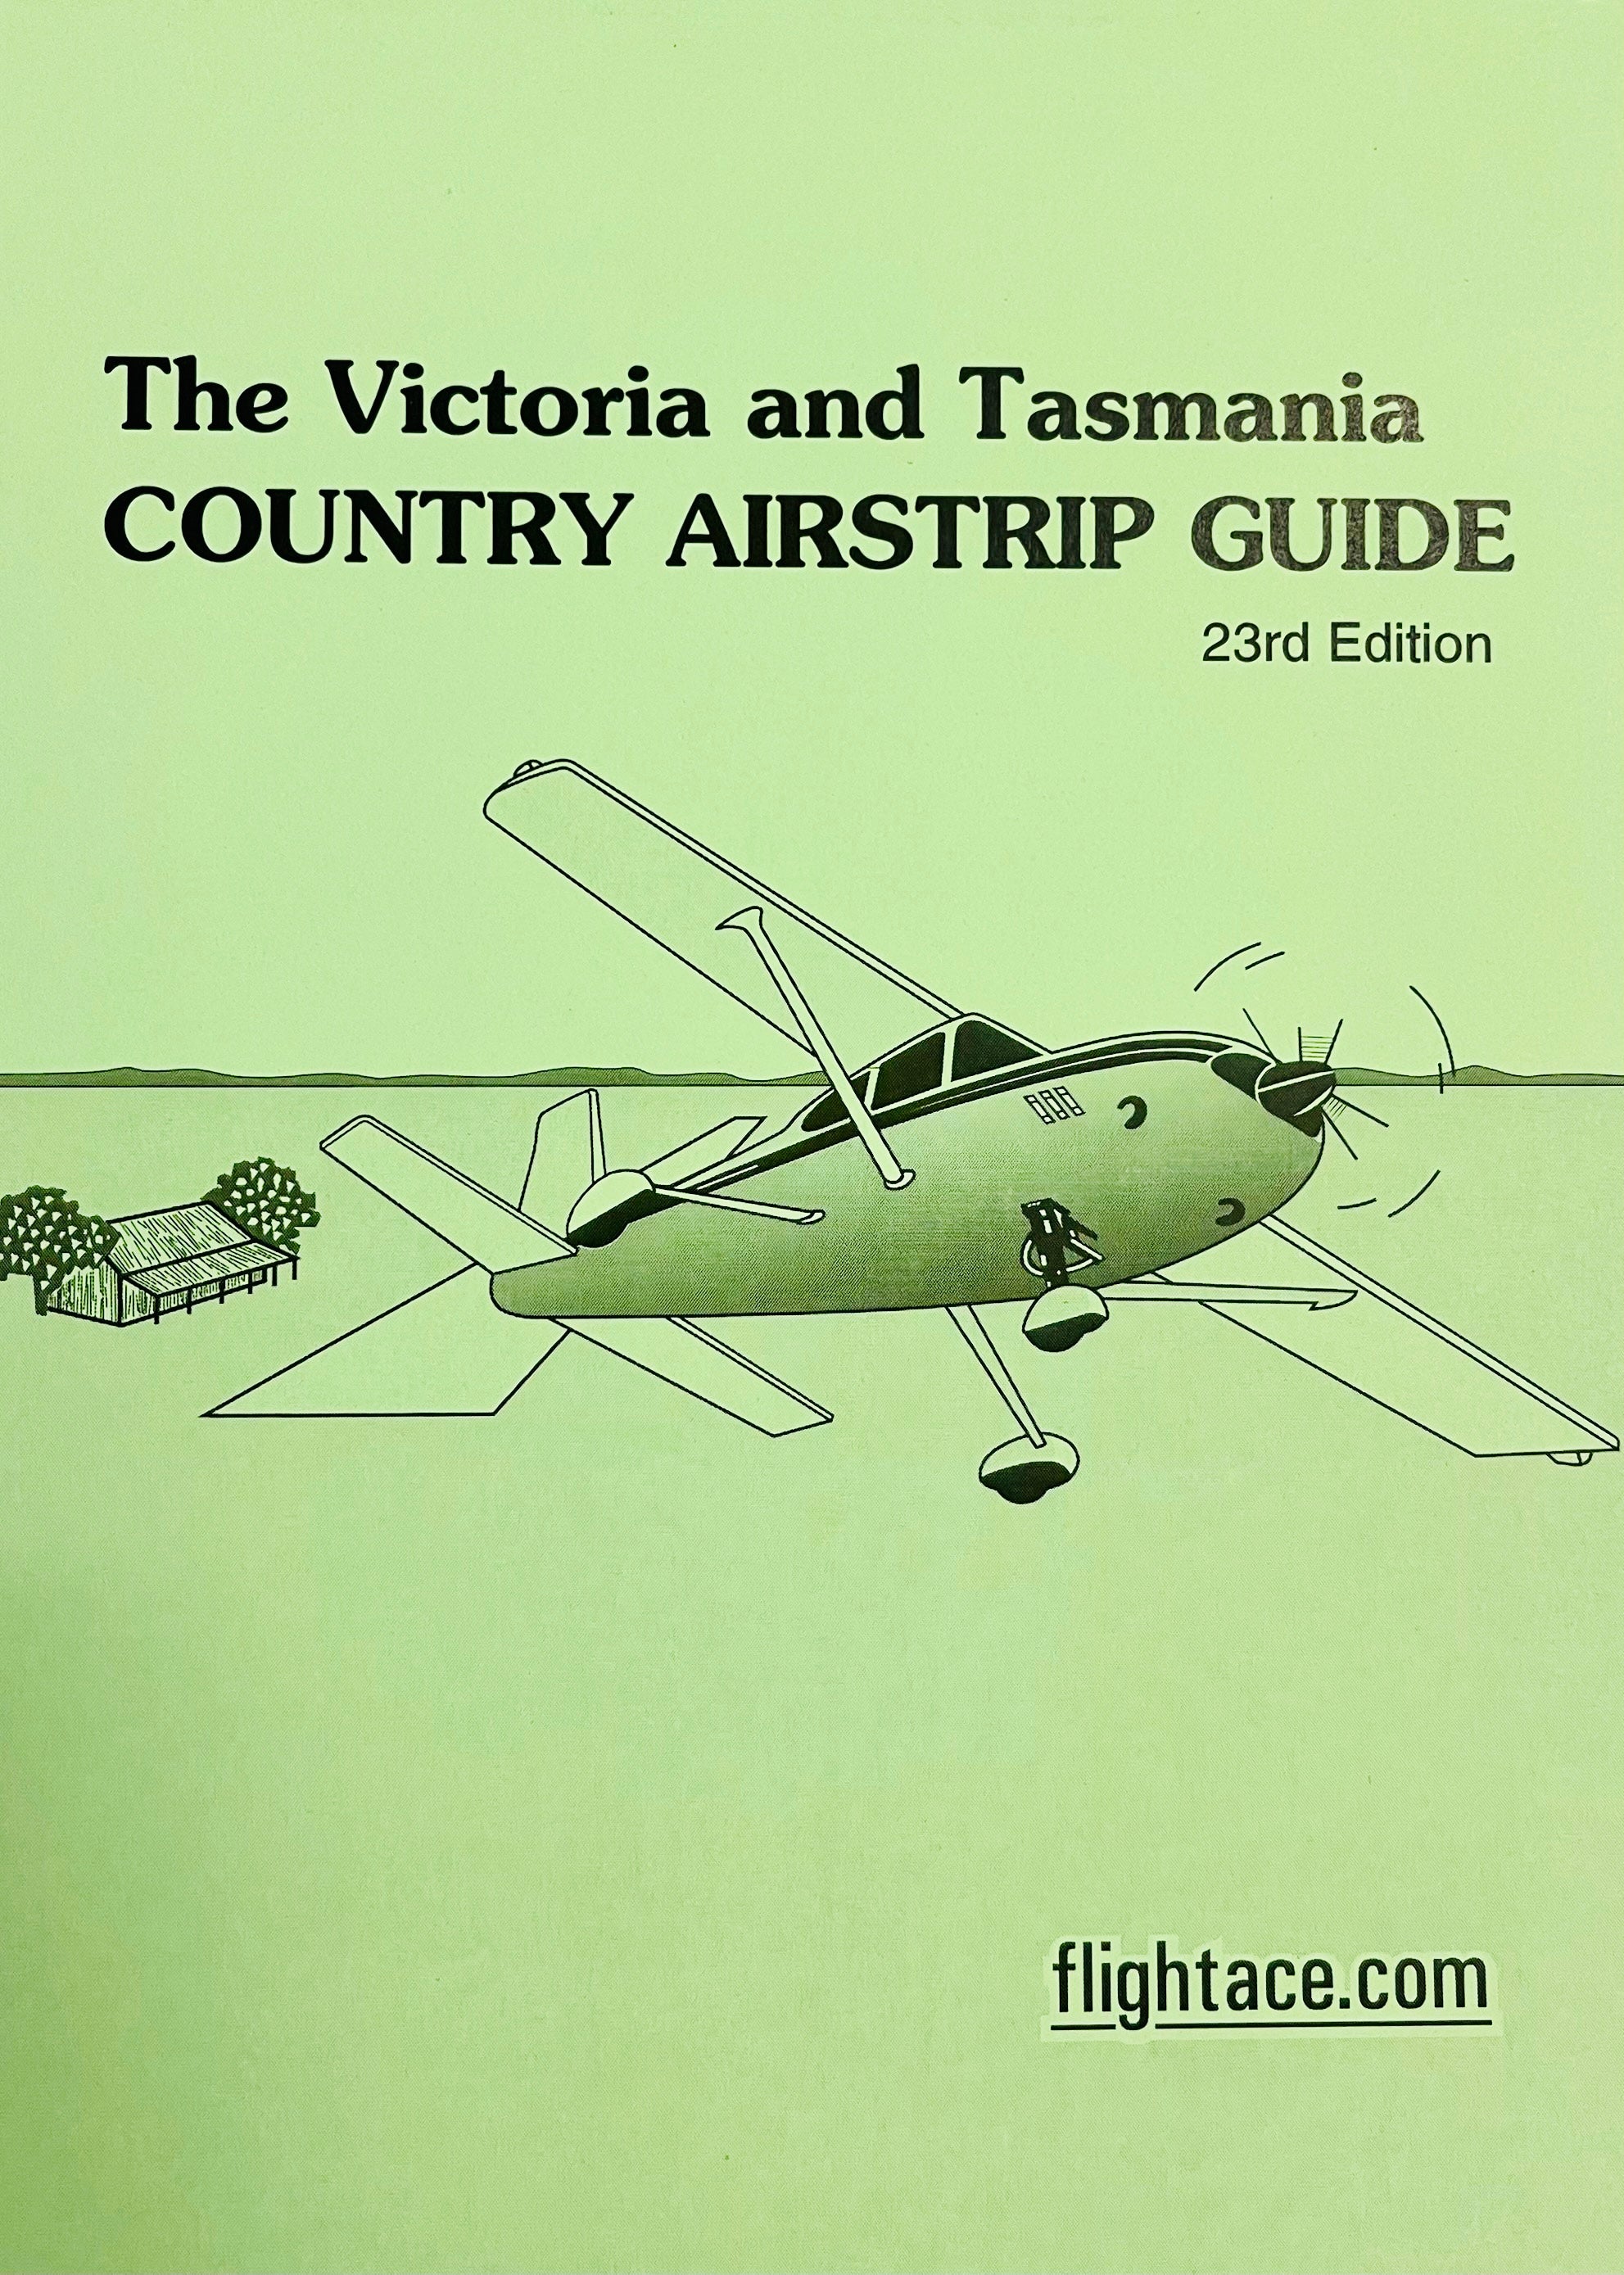 Country Airstrip Guide Victoria & Tasmania